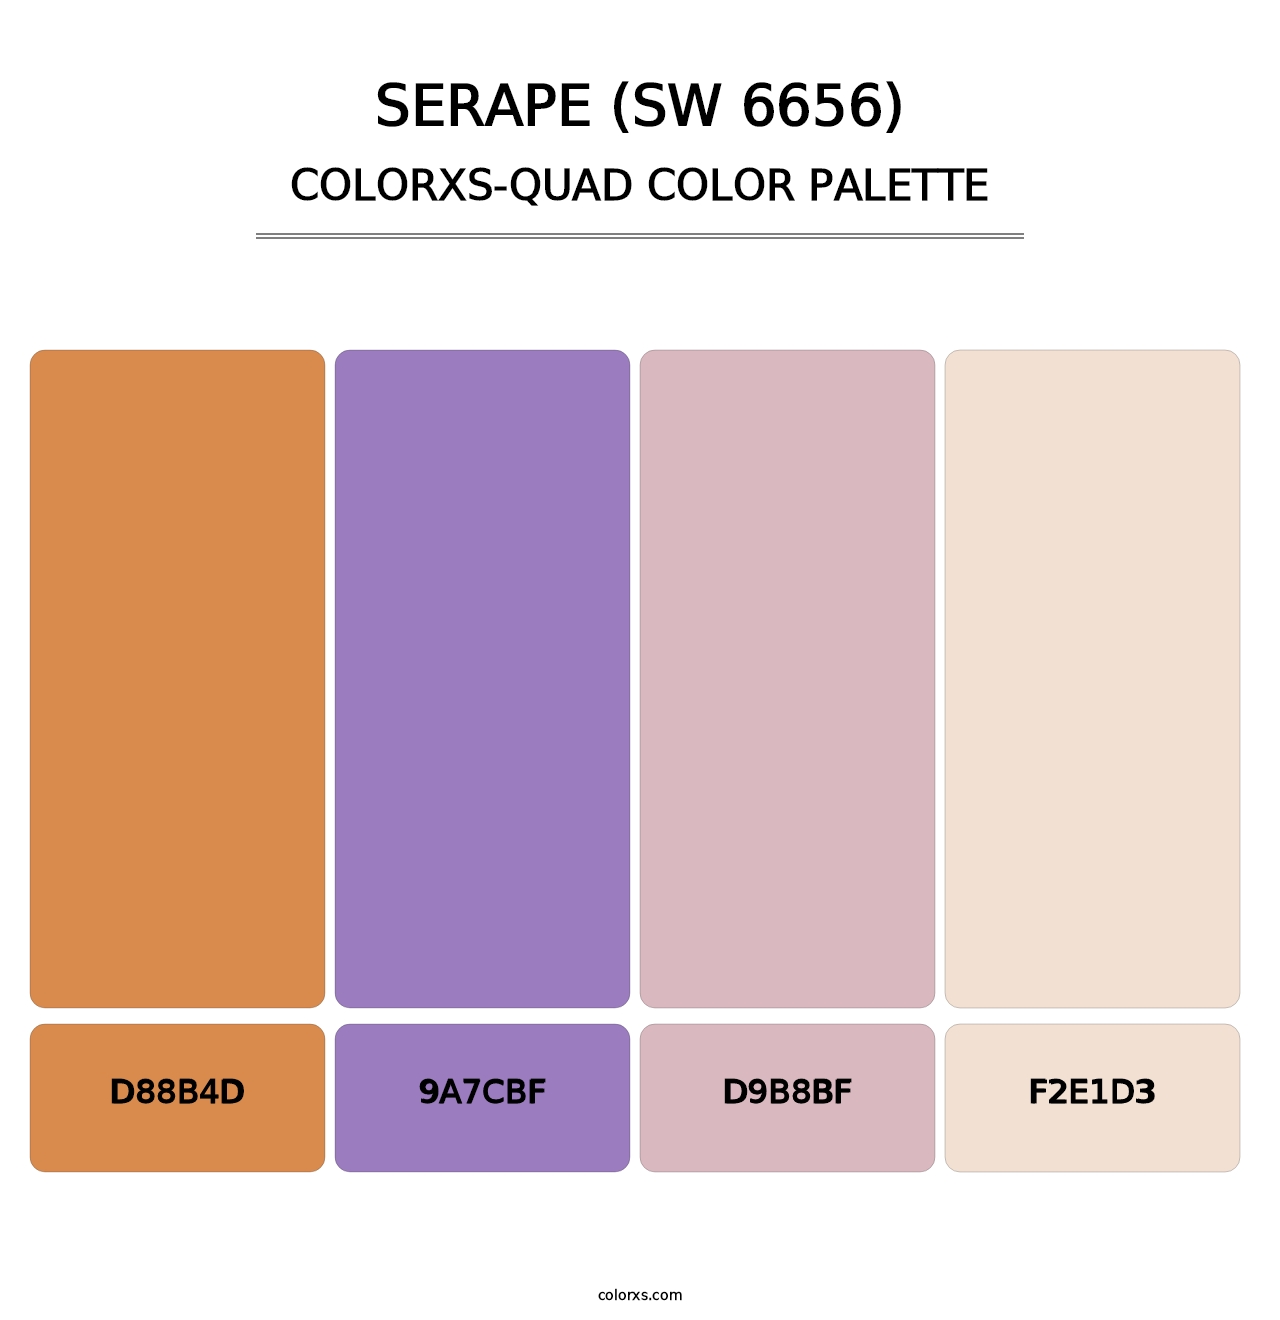 Serape (SW 6656) - Colorxs Quad Palette